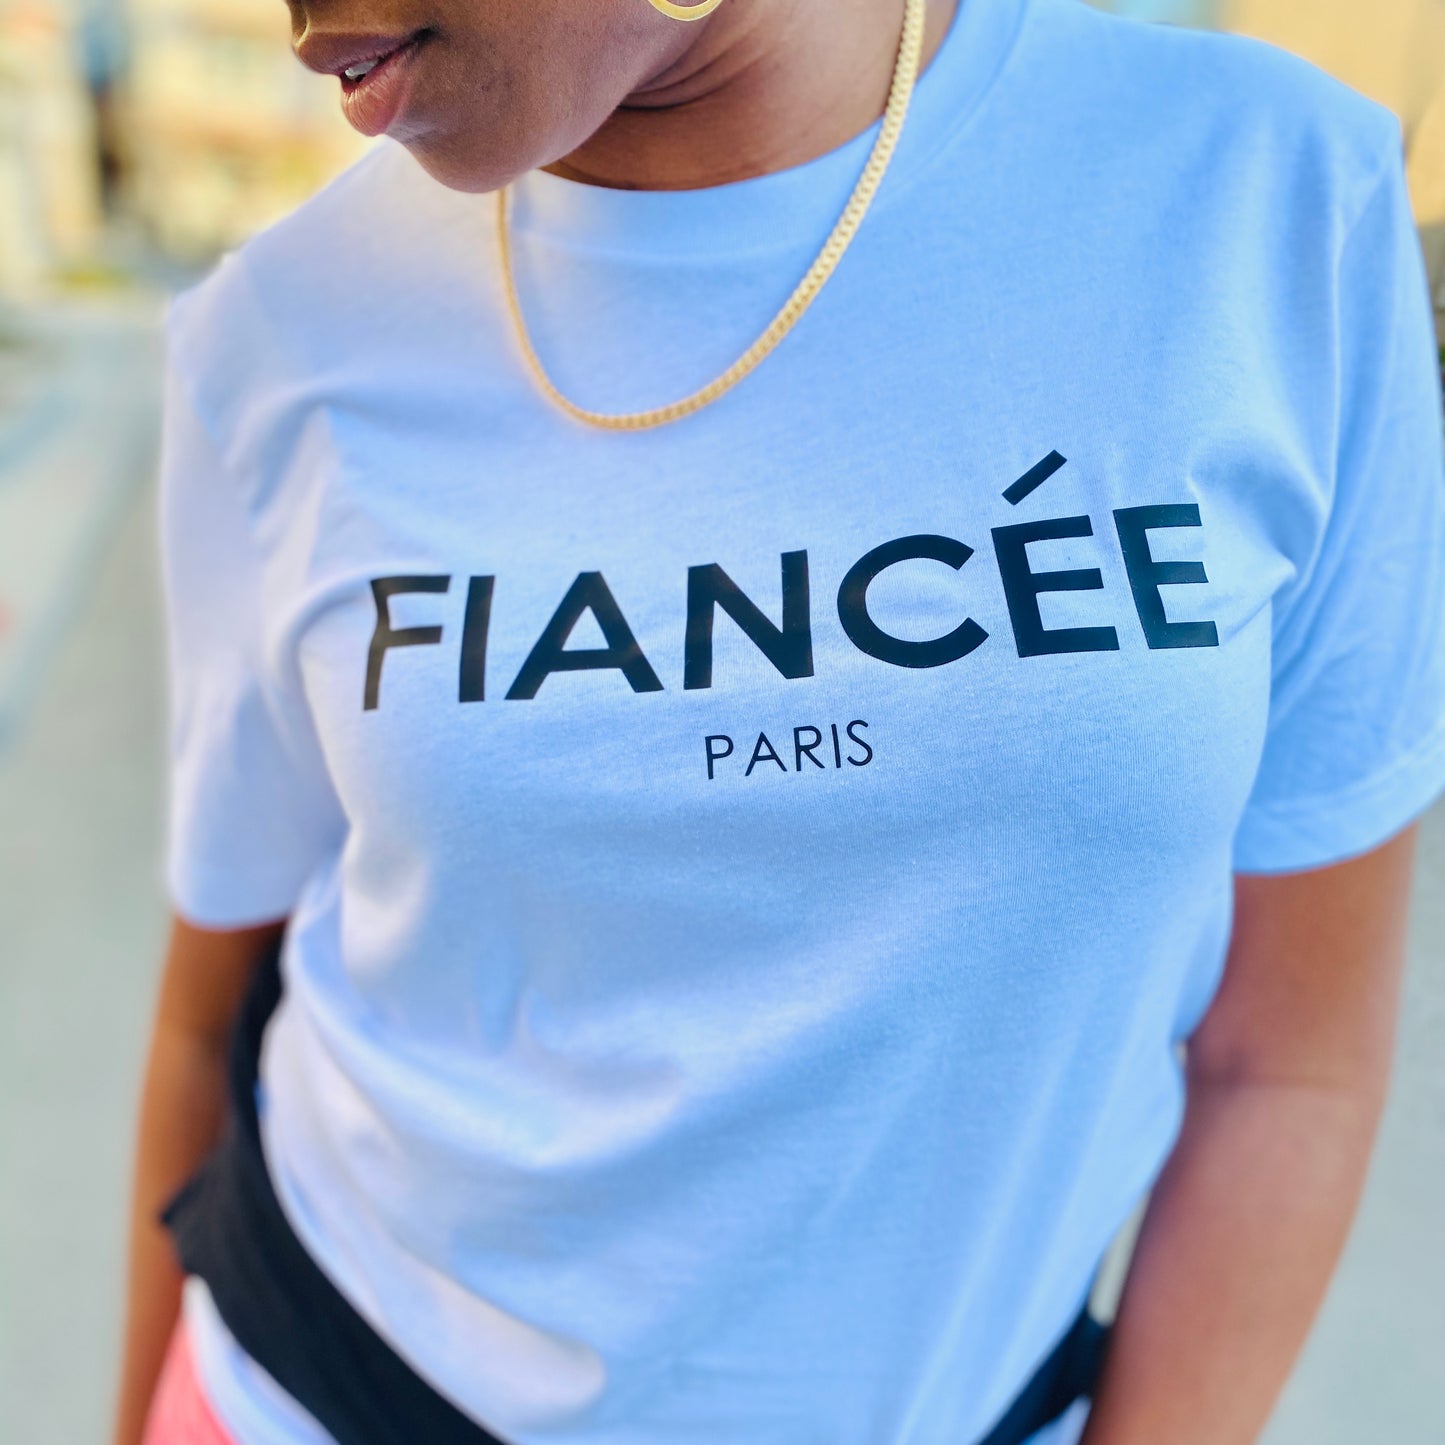 BLANCHE FIANCEE IN PARIS TEE